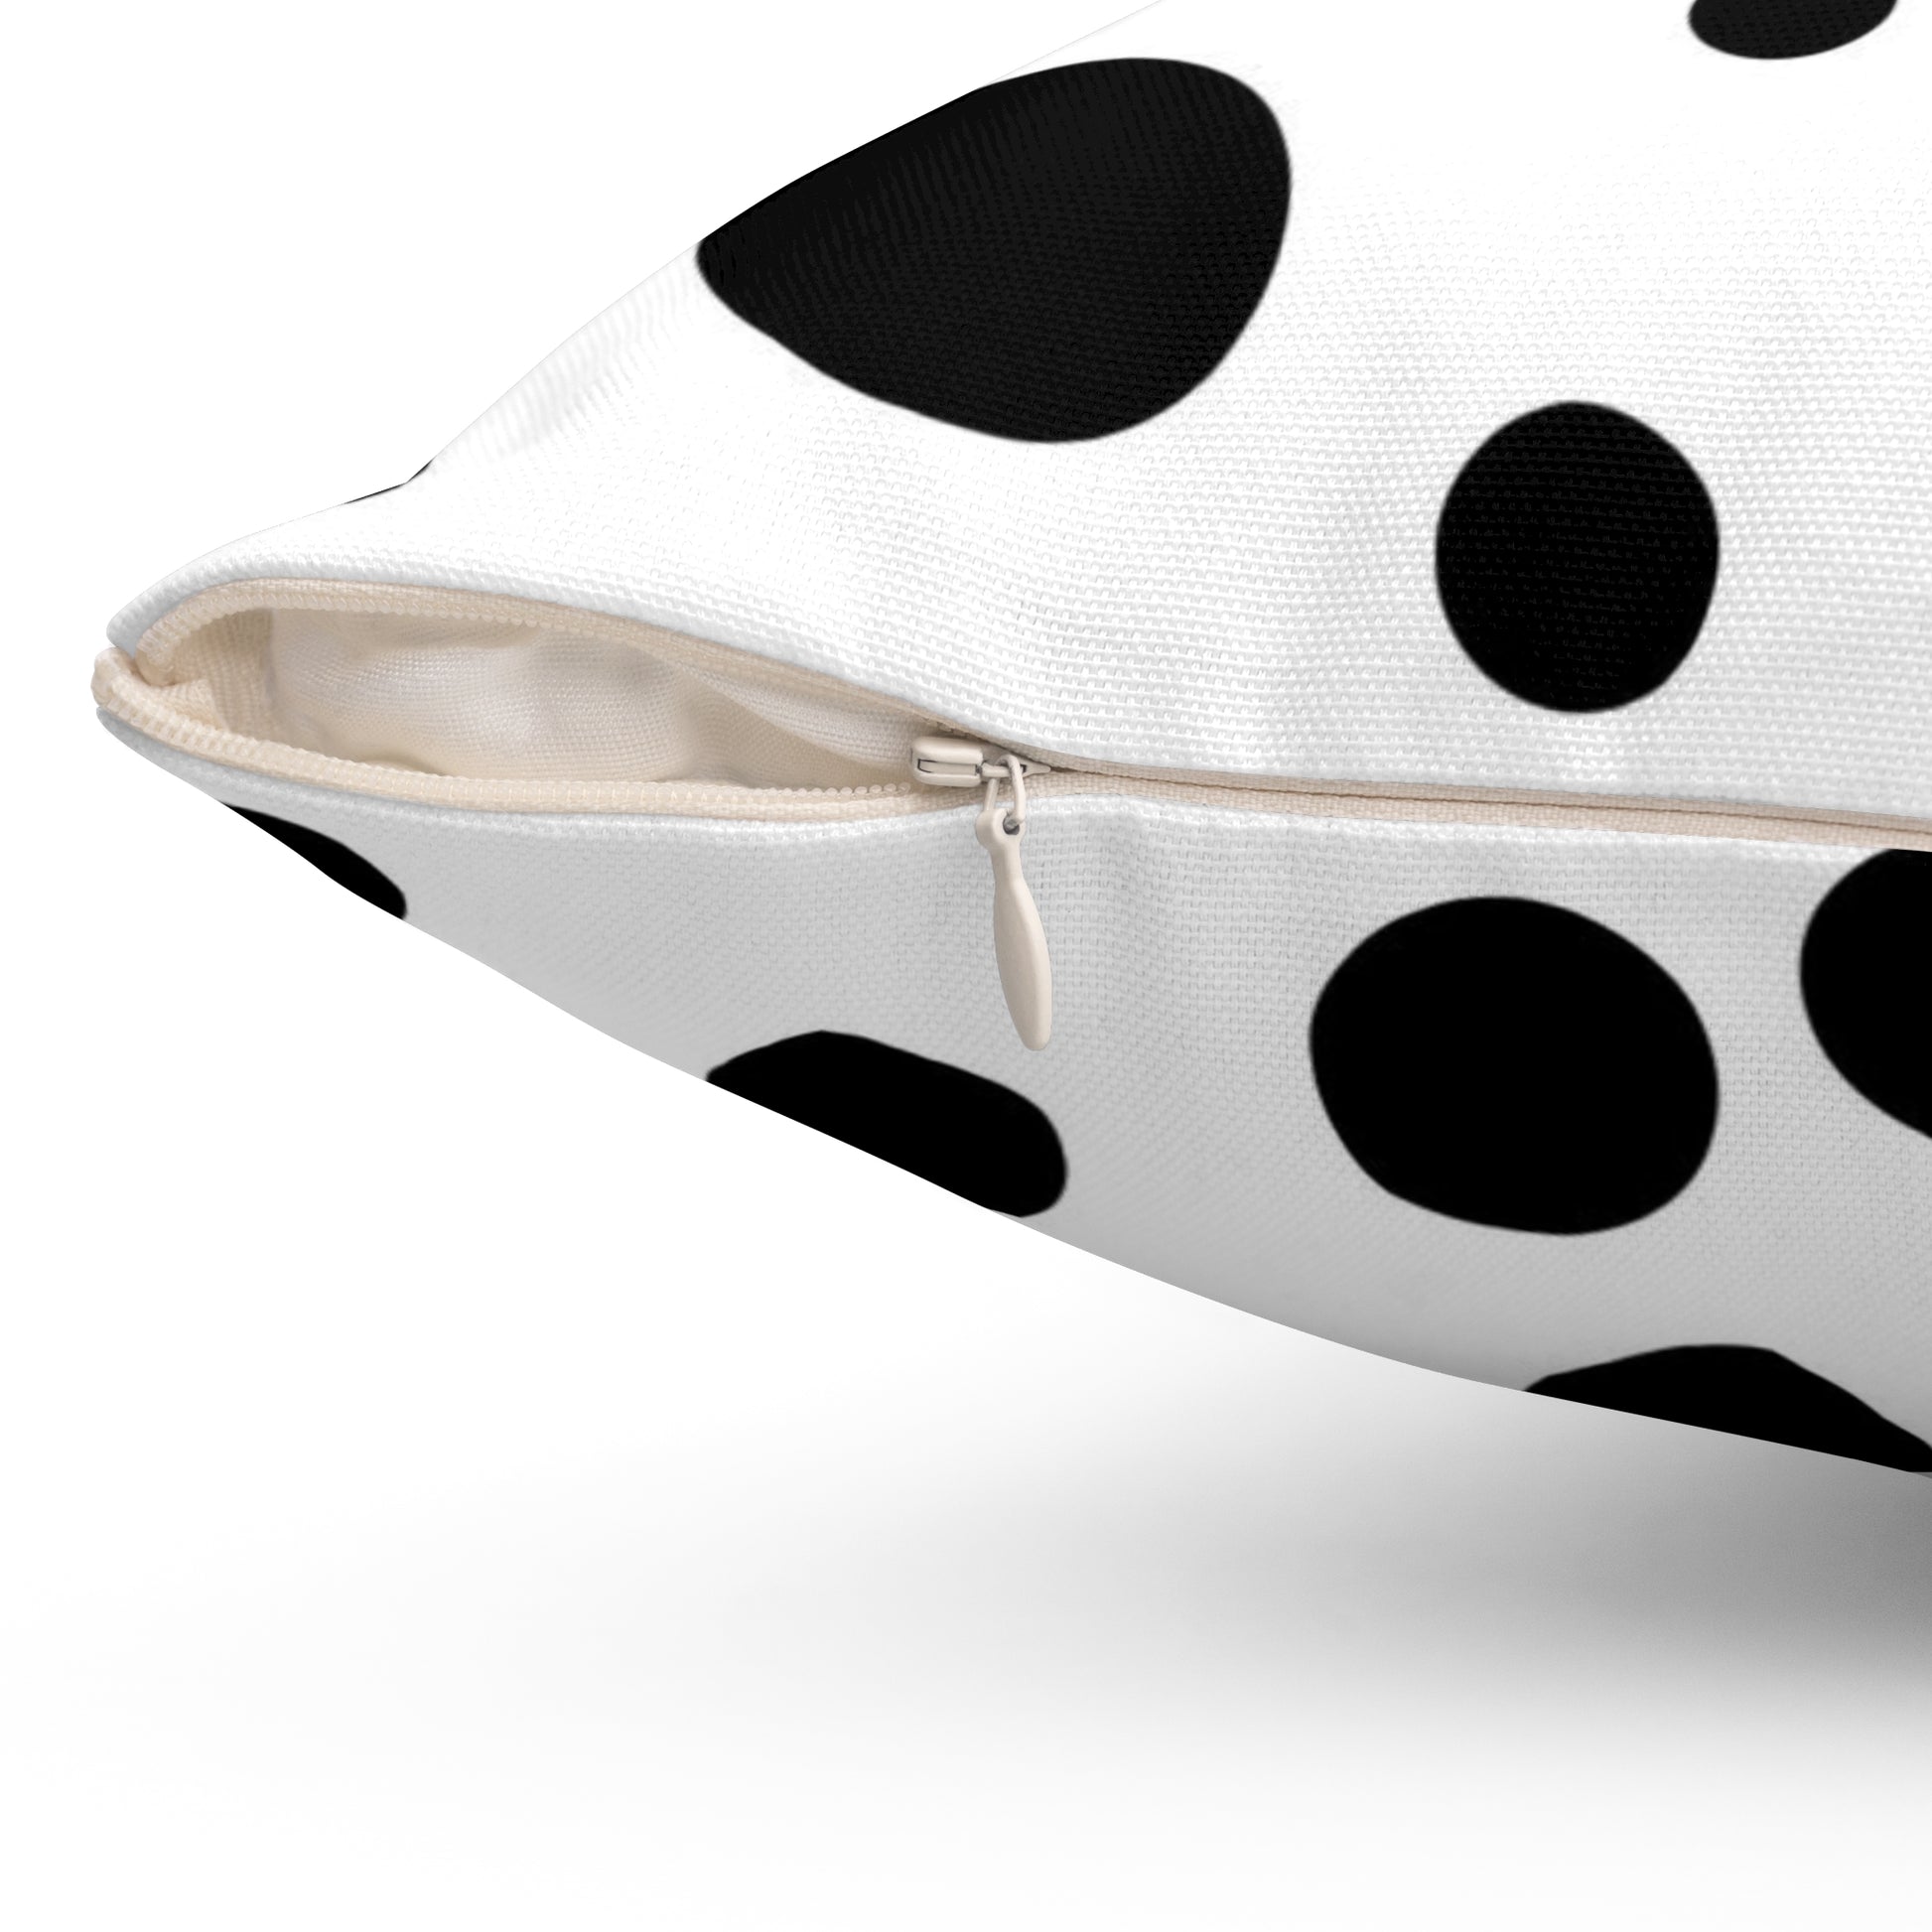 Spun Polyester Designer Square Pillow (Spots) - Revel Sofa 